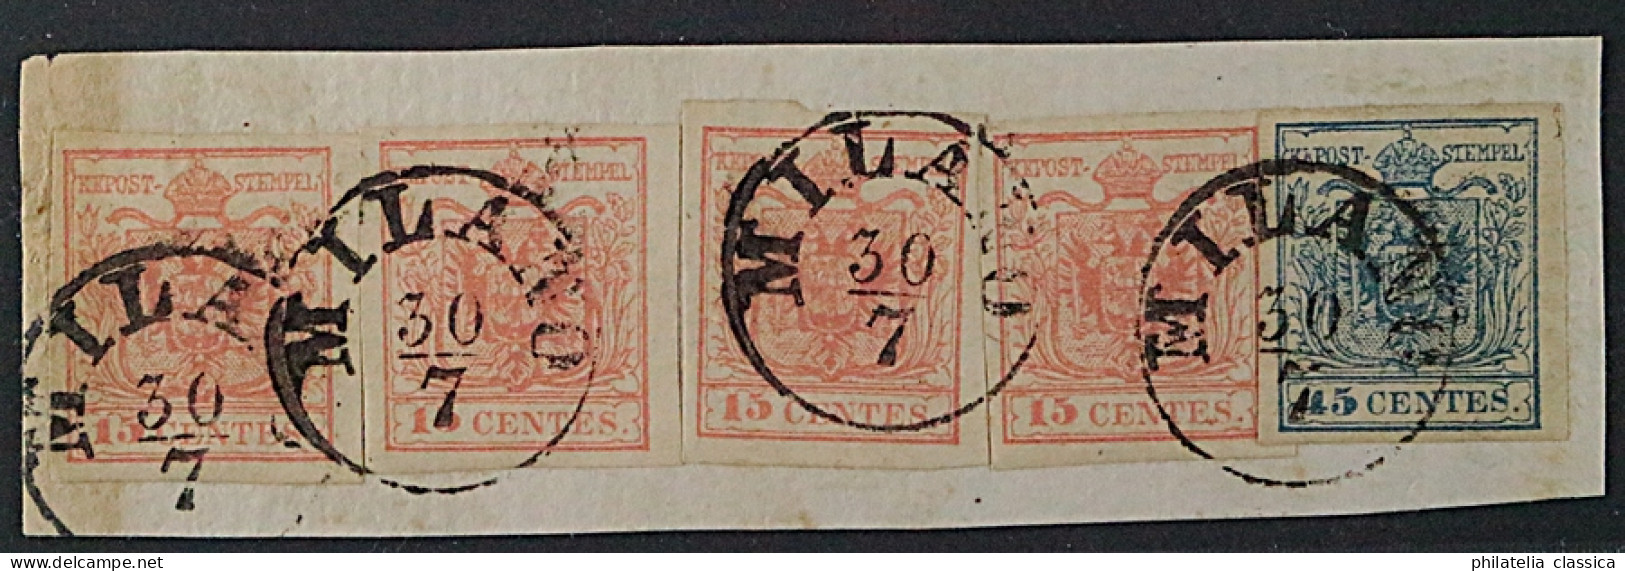 Lombardei  3 (4) + 5 Y Briefstück Mit 4 X 15 Cmi. Und 45 Cmi. Maschinenpapier - Lombardije-Venetië